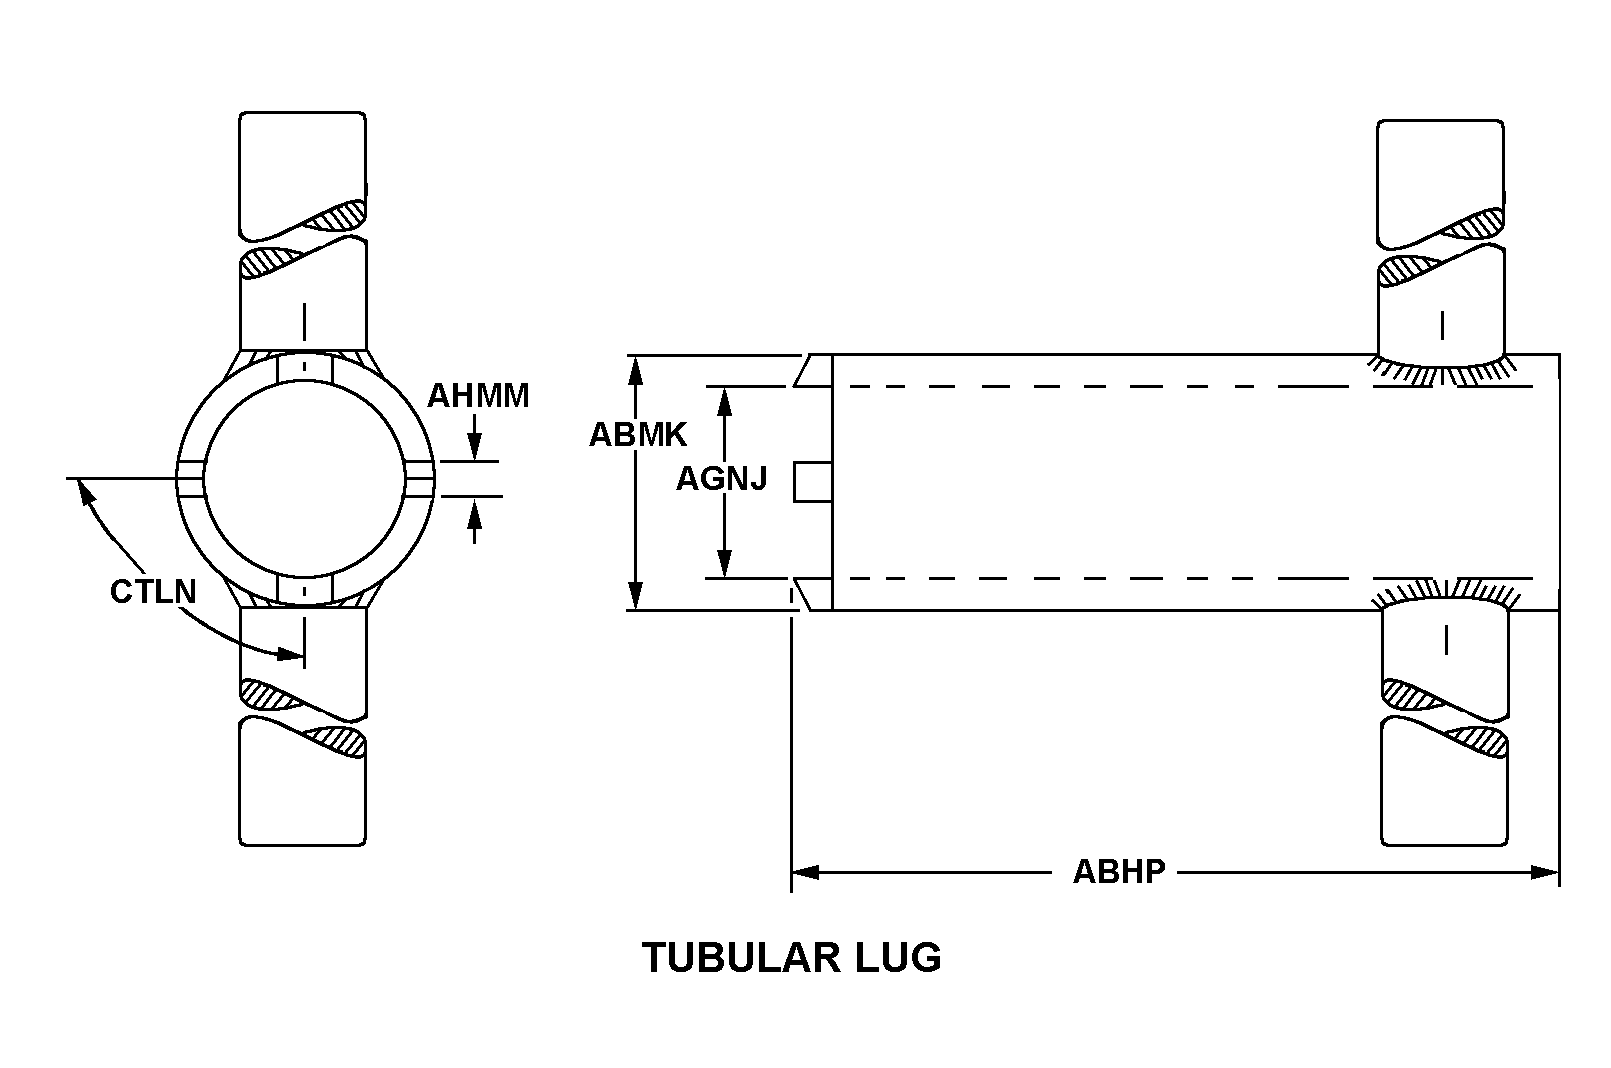 TUBULAR LUG style nsn 5120-00-720-0958